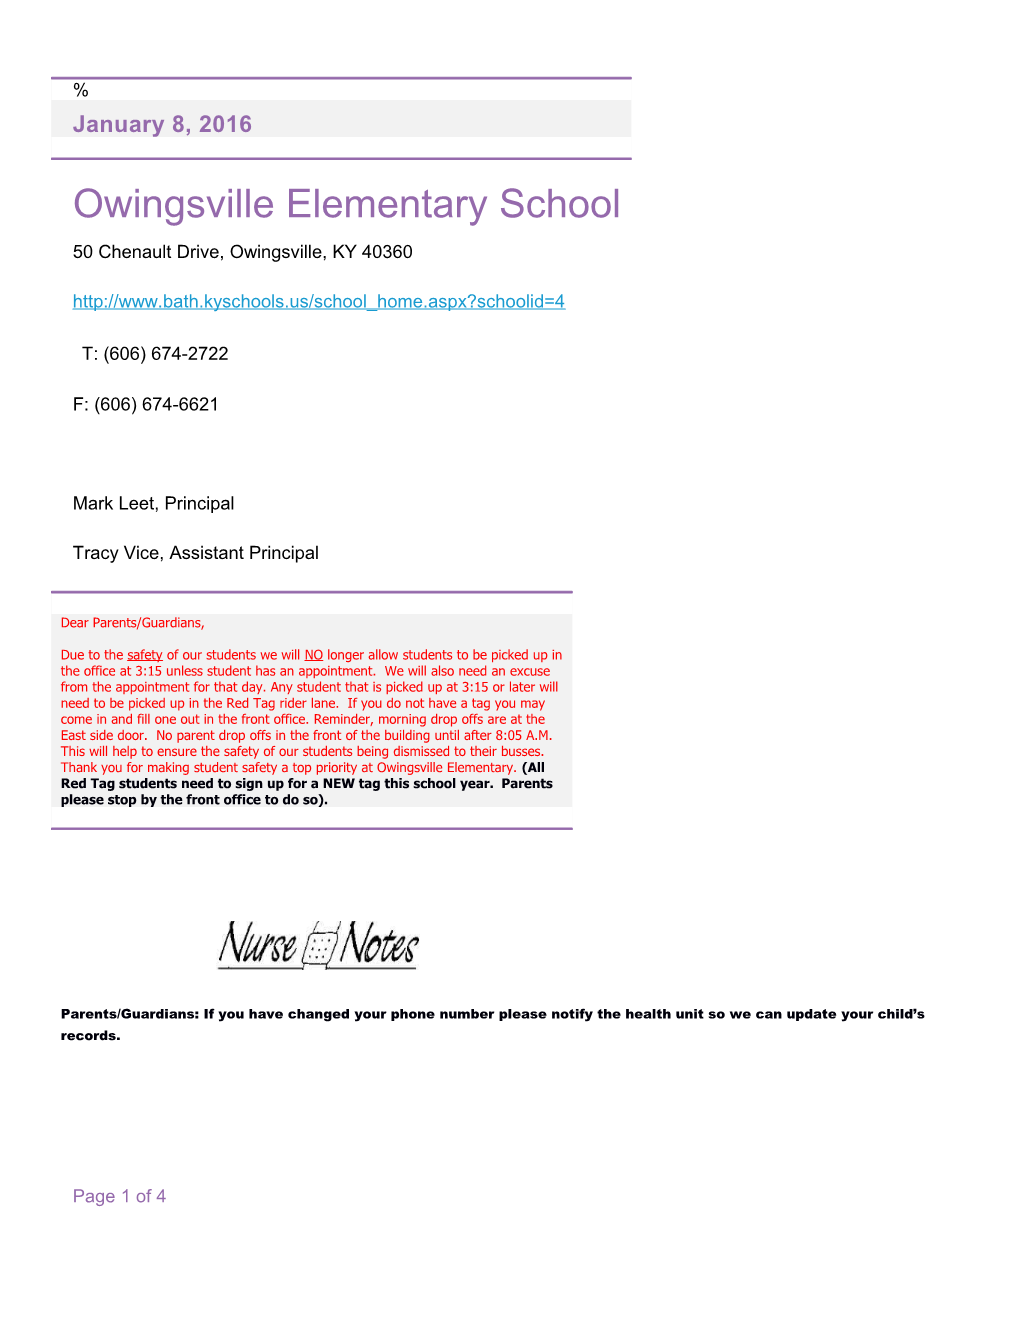 Owingsville Elementary School